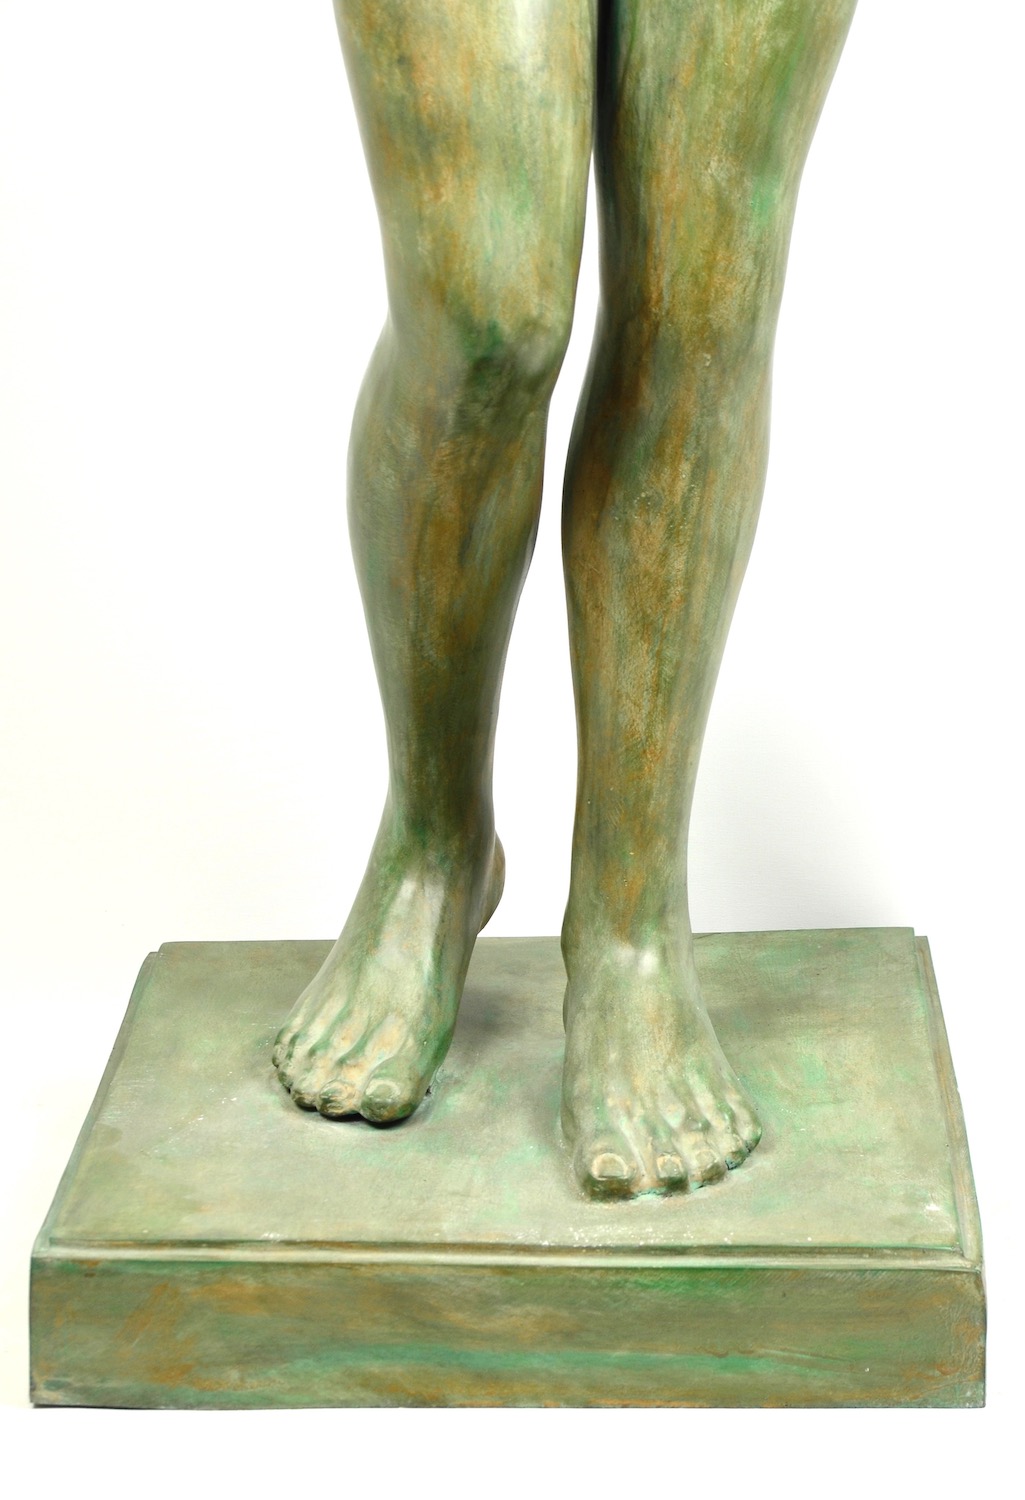 Bronzefigur BETENDER KNABE,  Originalgröße 130 cm, grün patiniert